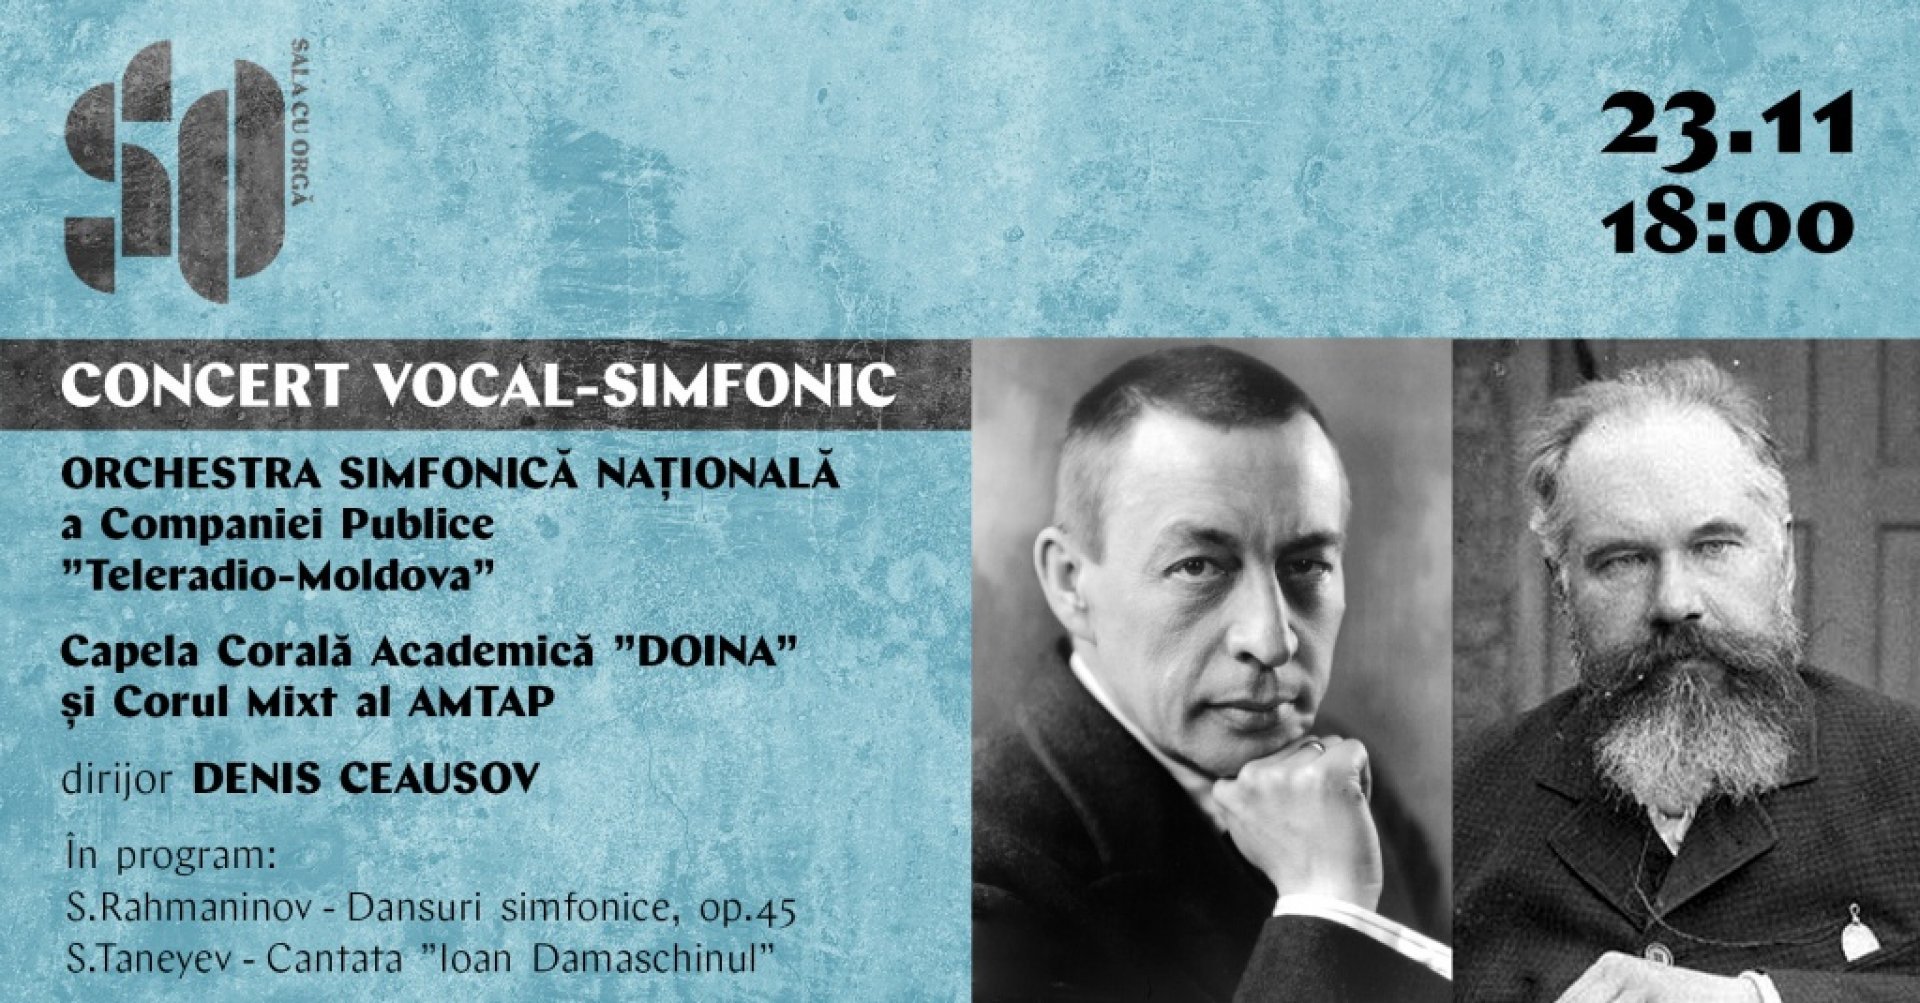 Concert Vocal-Simfonic 23.11